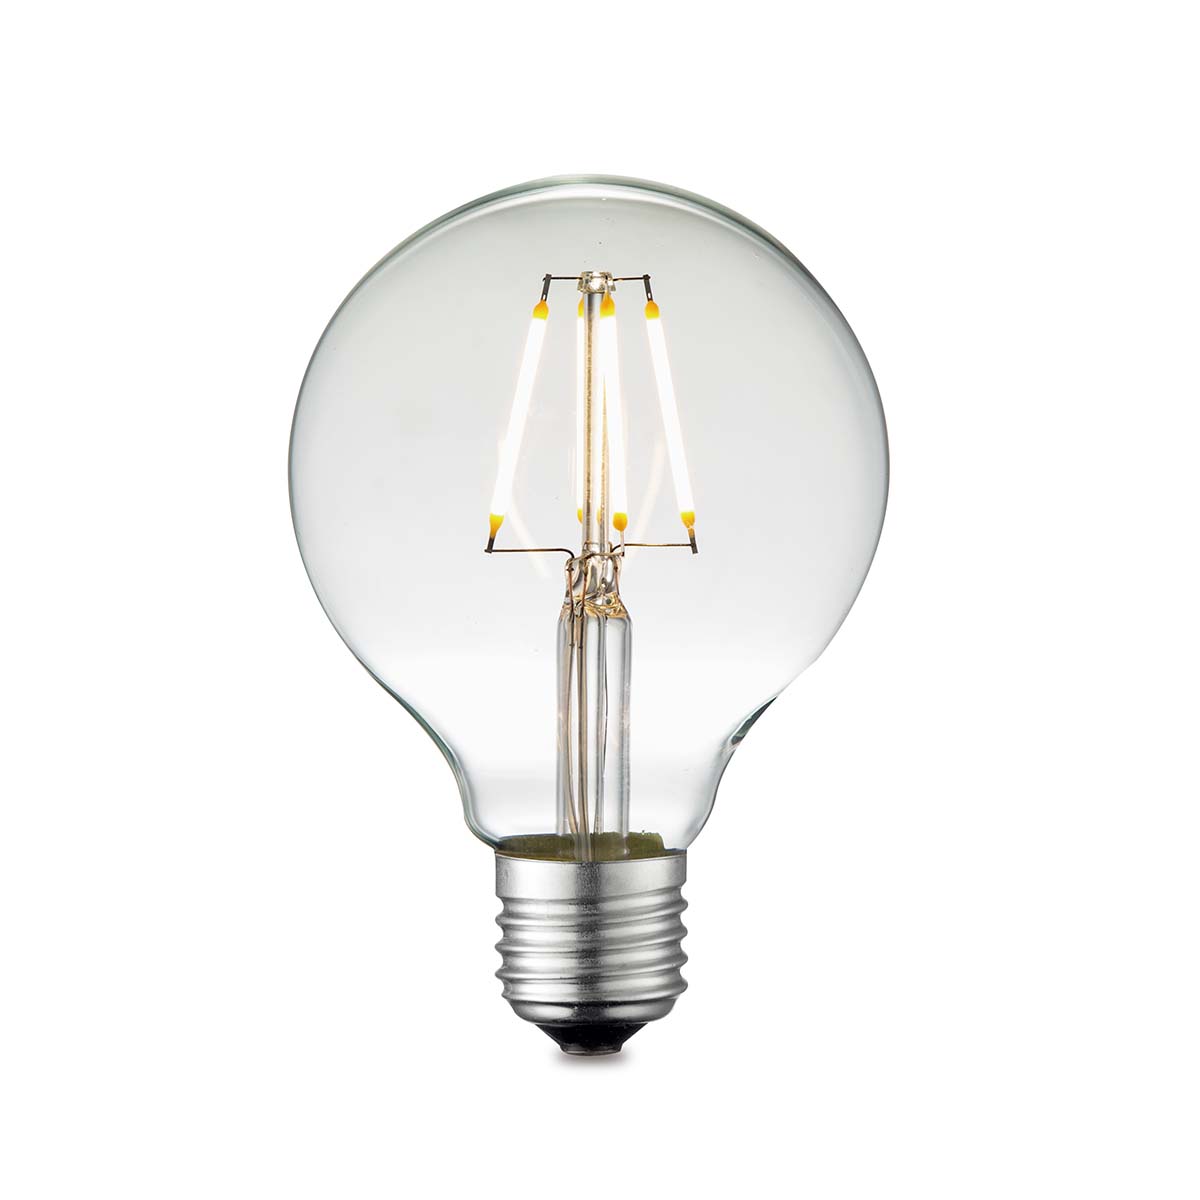 Tangla lighting - TLB-8003-06CL - LED Light Bulb Deco filament - G80 6W clear - dimmable - E27